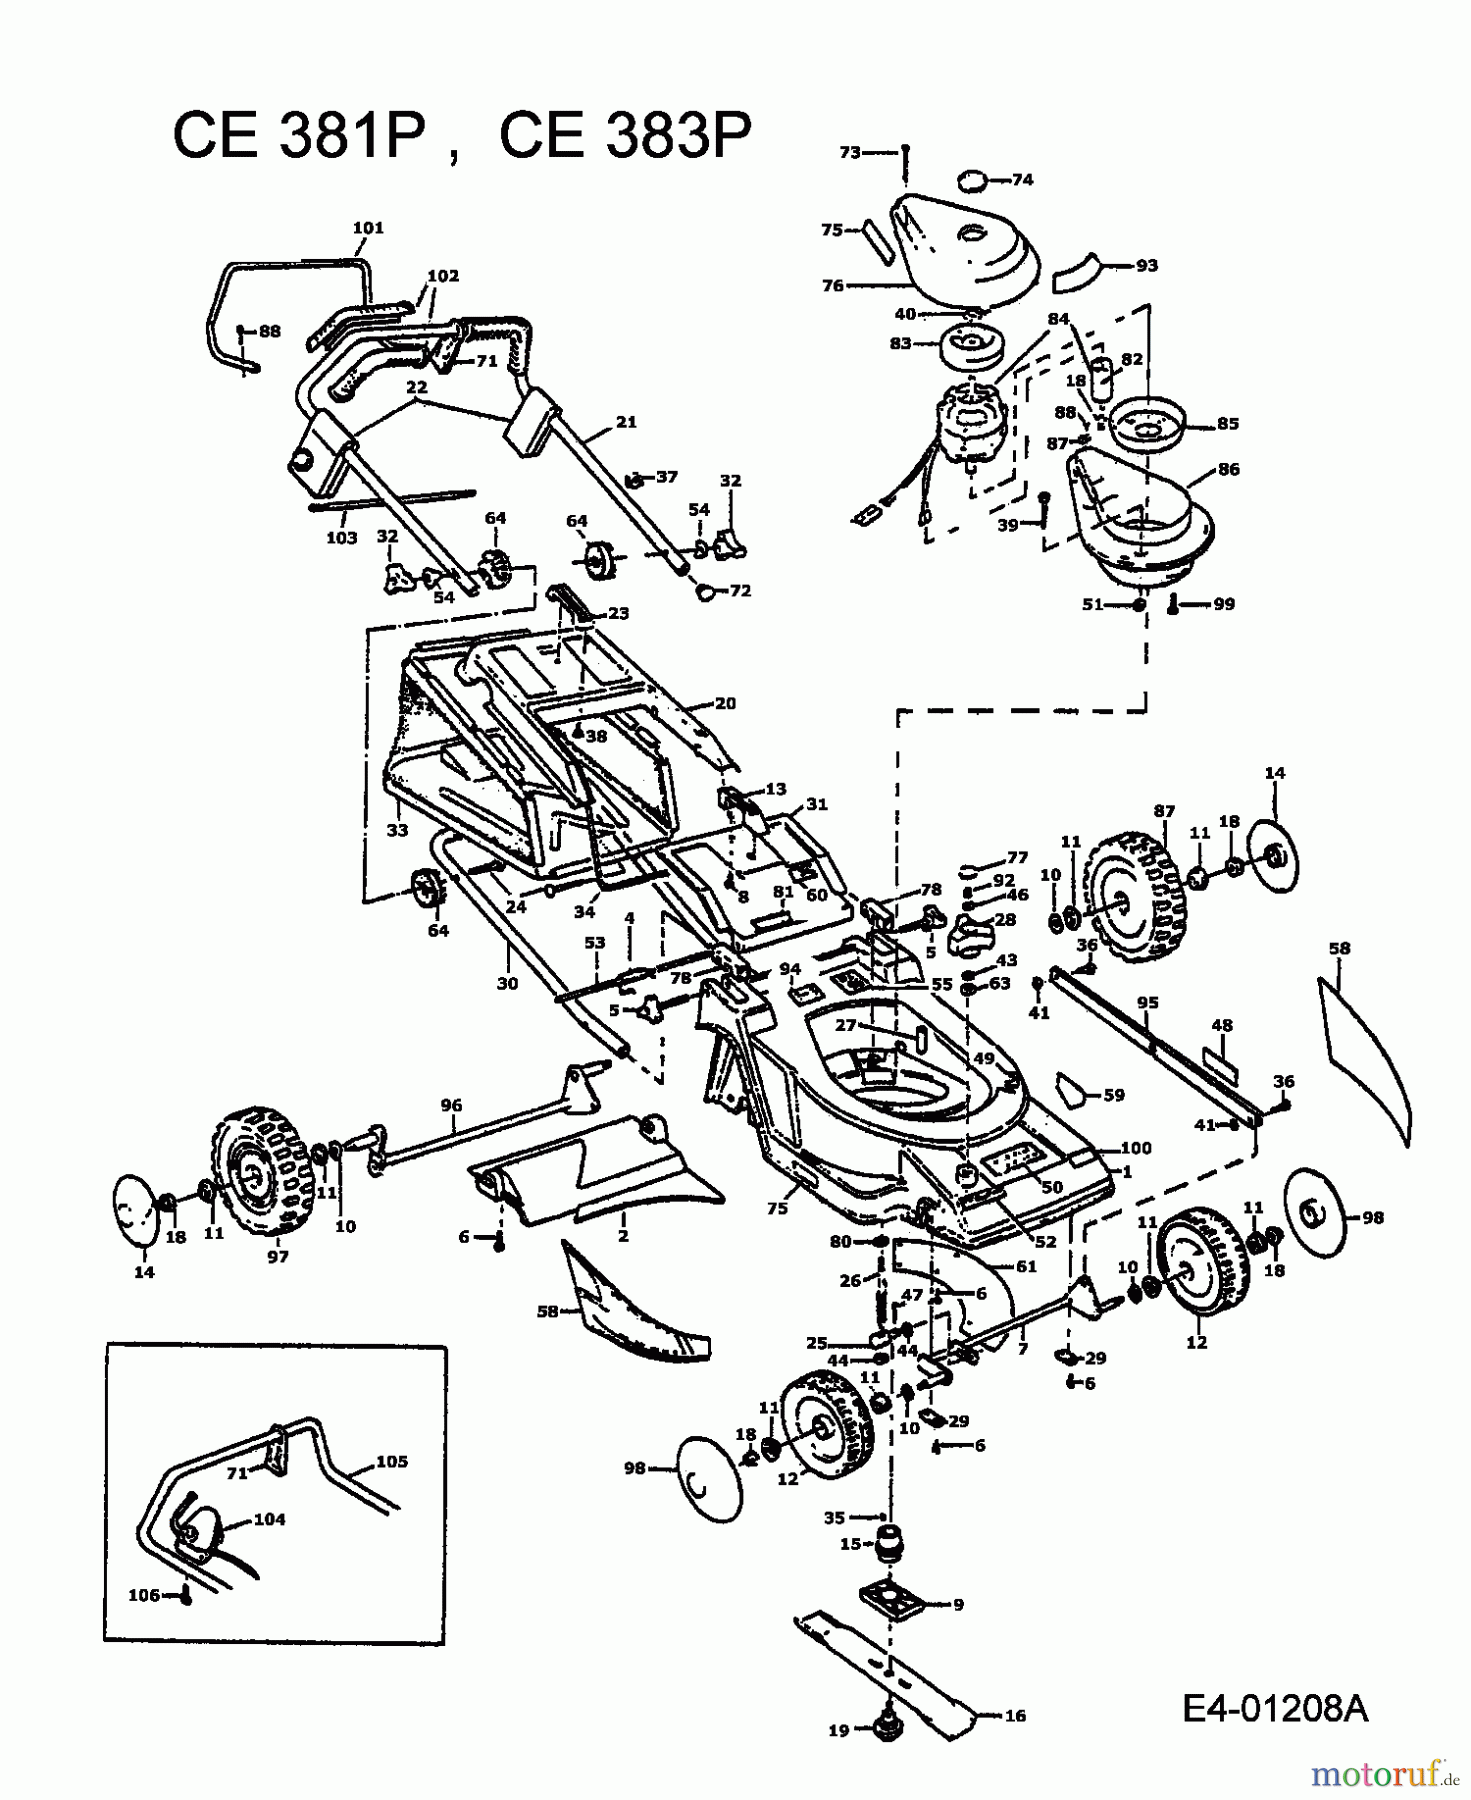  MTD Electric mower CE 381 P 901E383P001  (1994) Basic machine